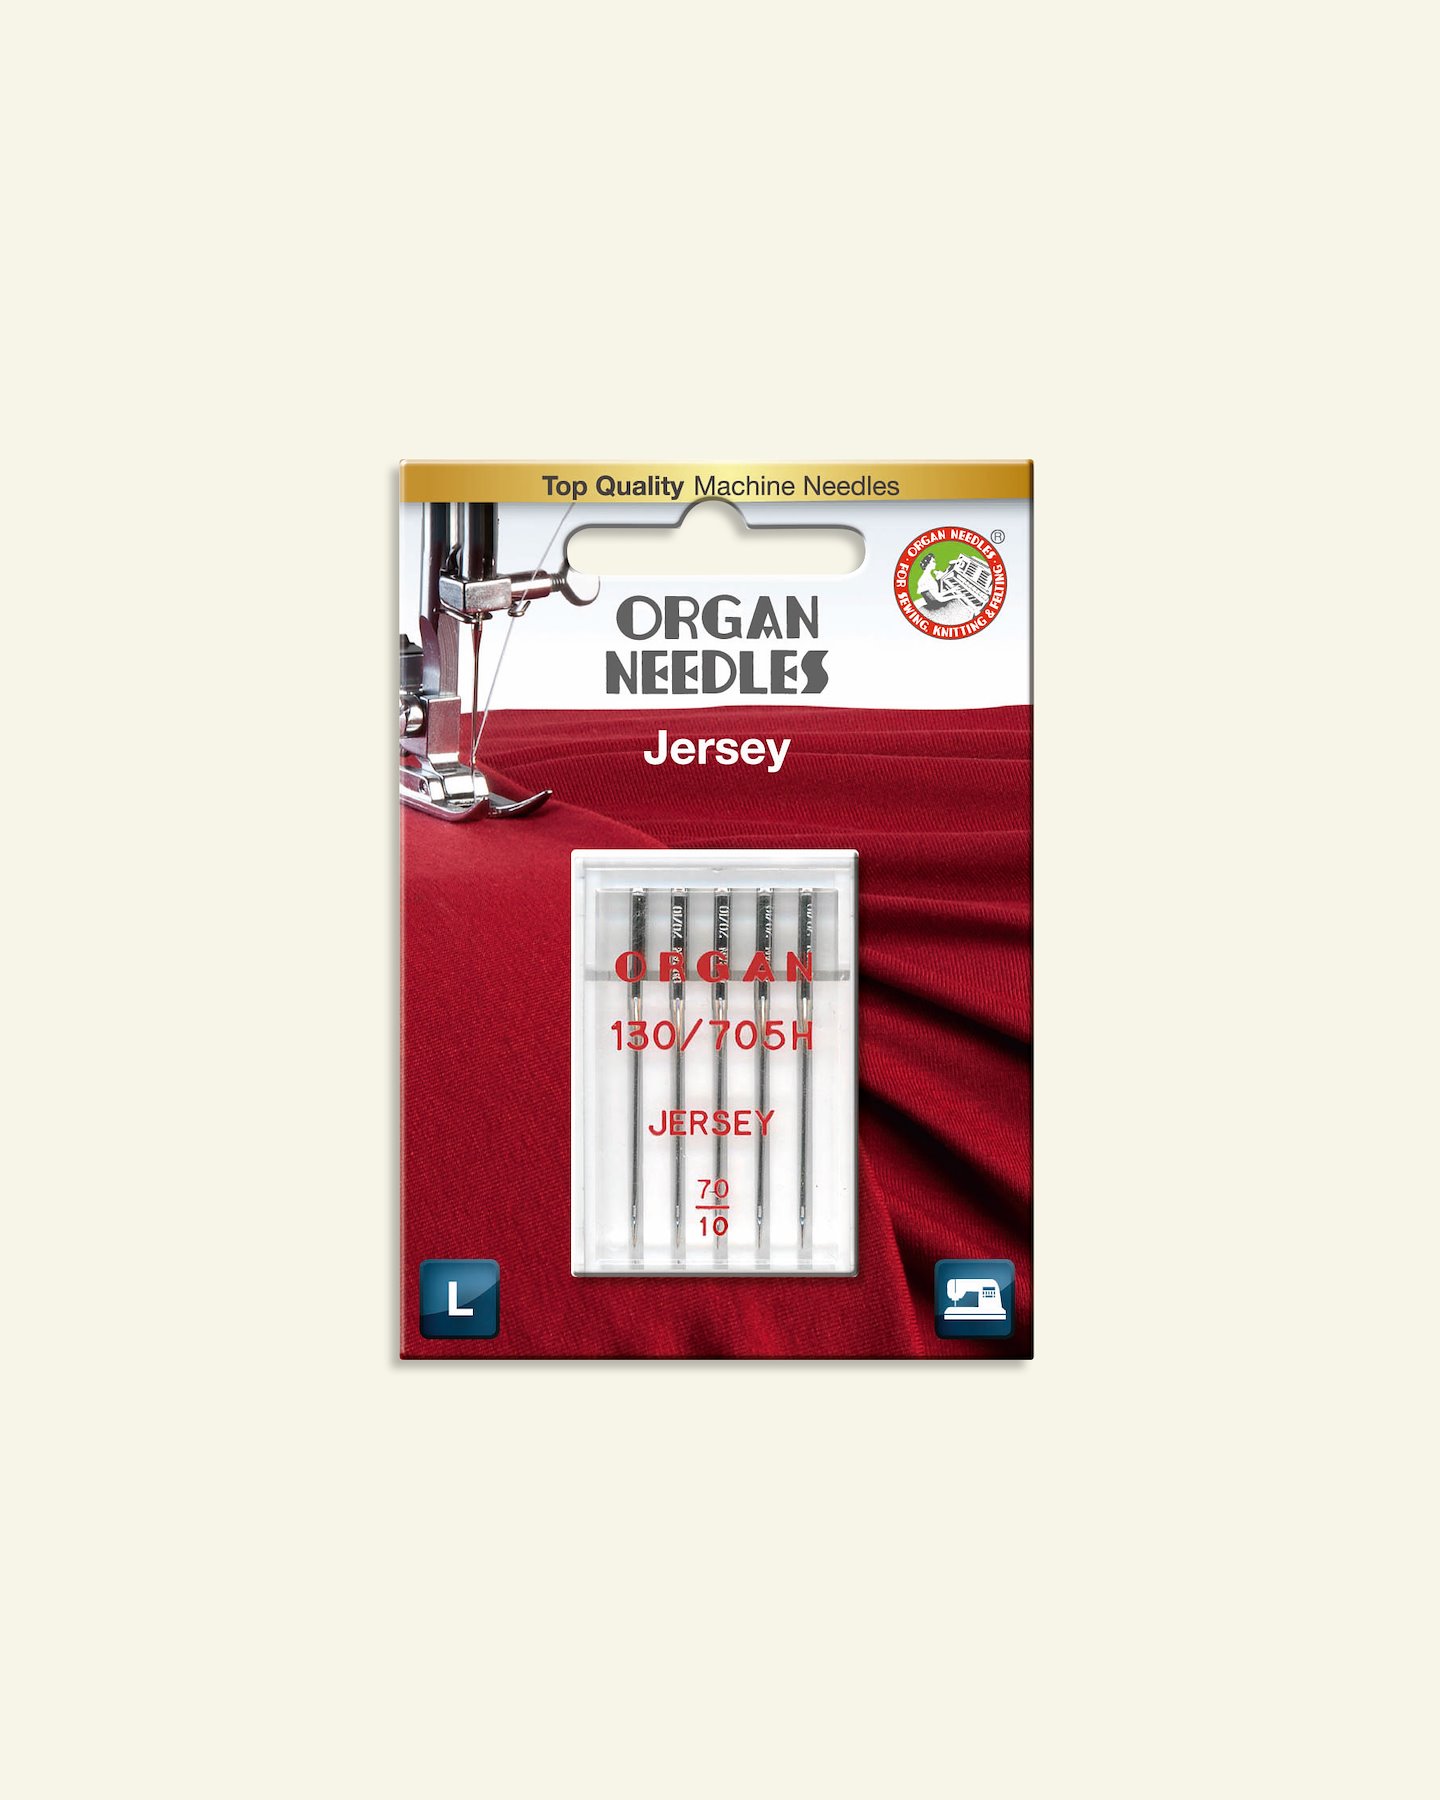 Jersey needles 130/705 H SUK size 70 5pc 46799_pack